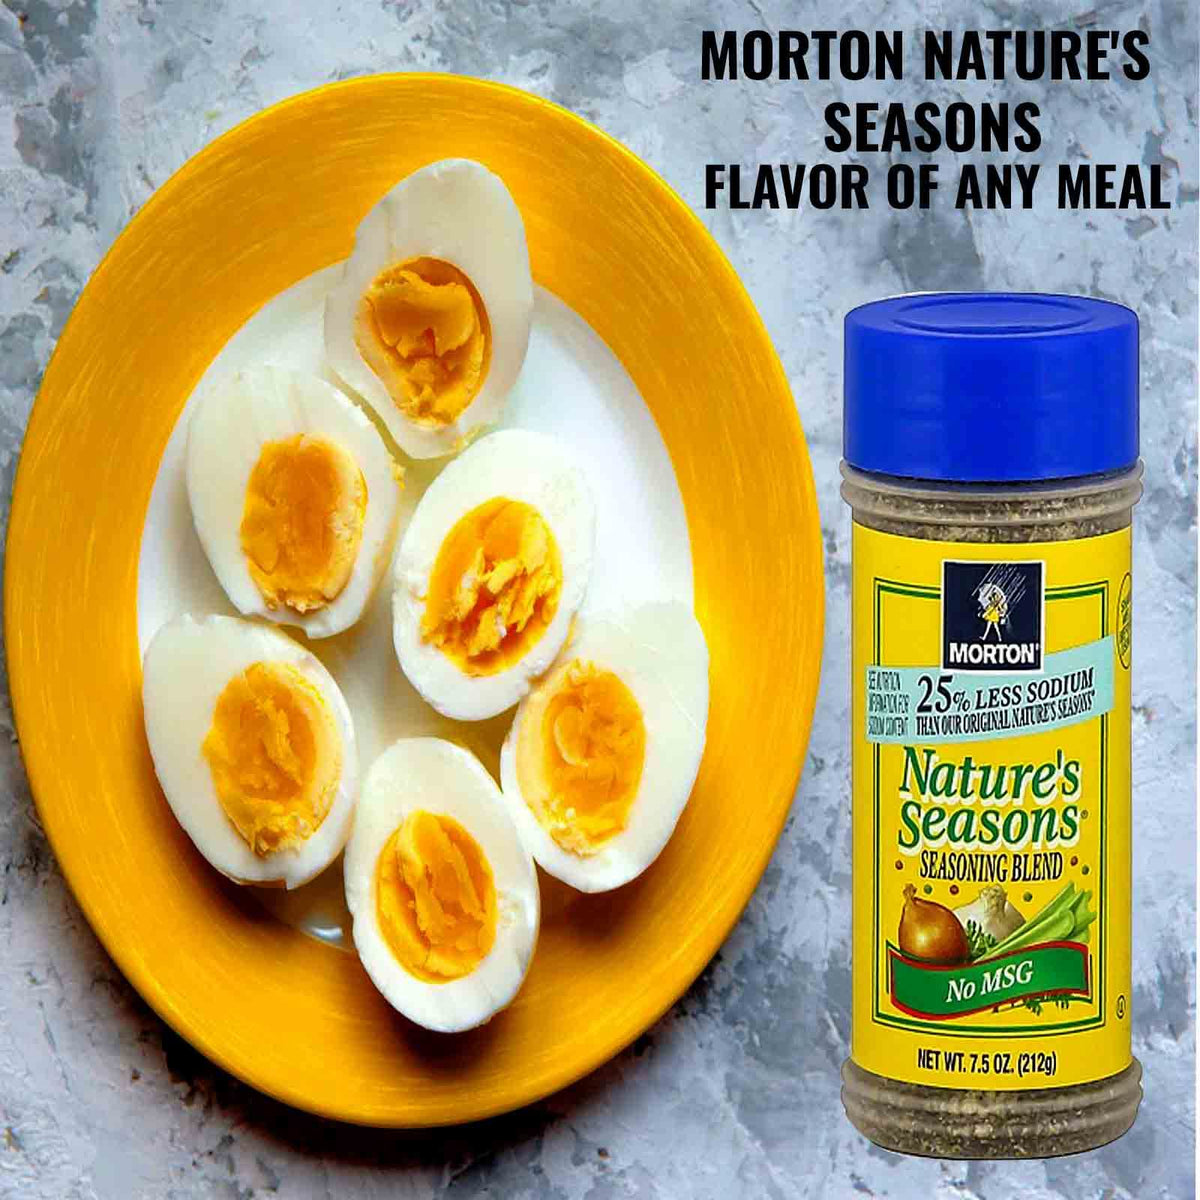 Mortons natures seasons seasoning blend - Morton - 4 oz